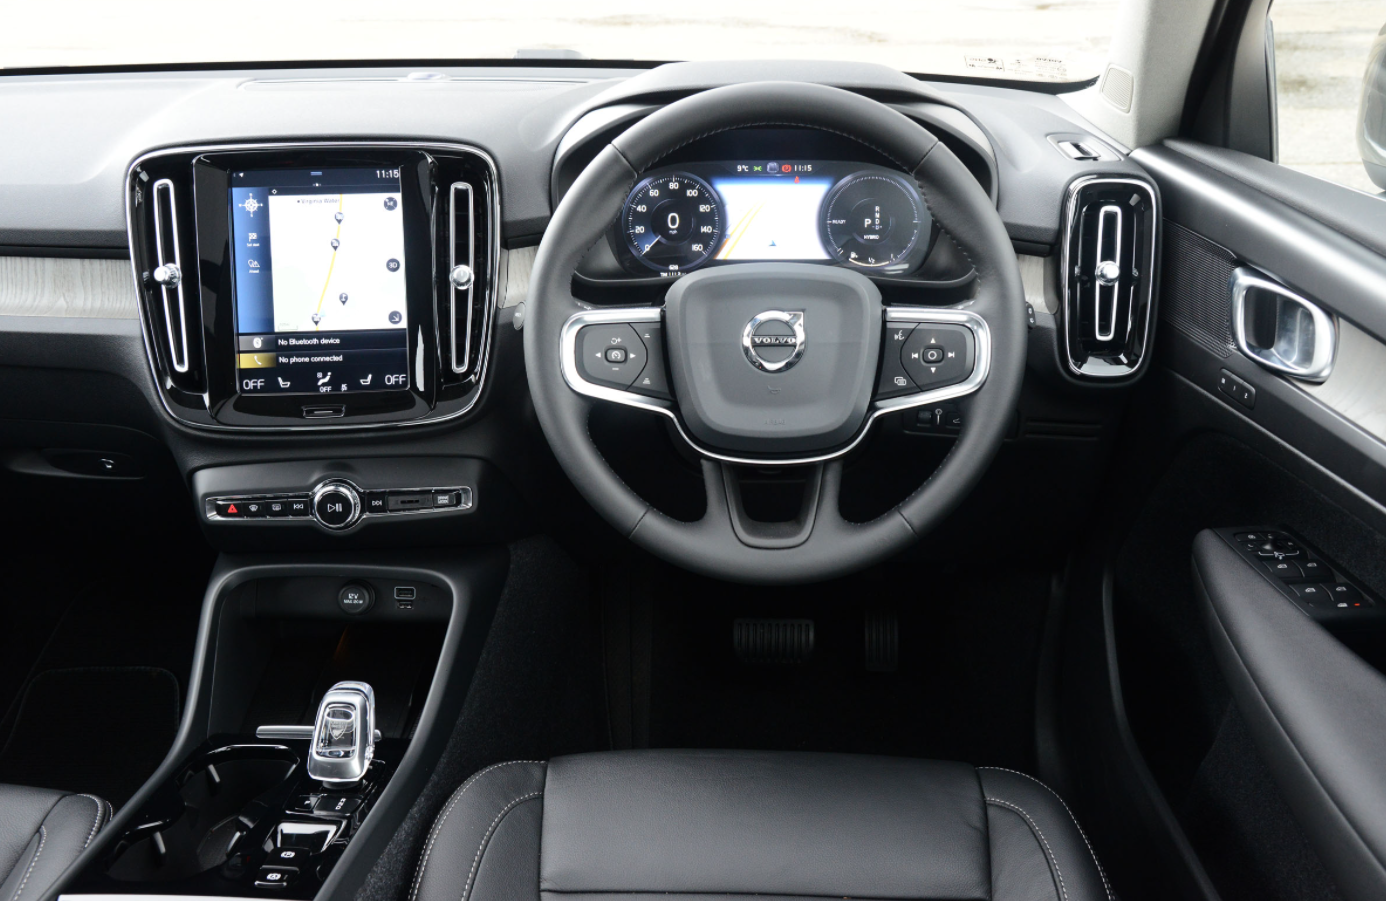 2022 Volvo XC40 Interior